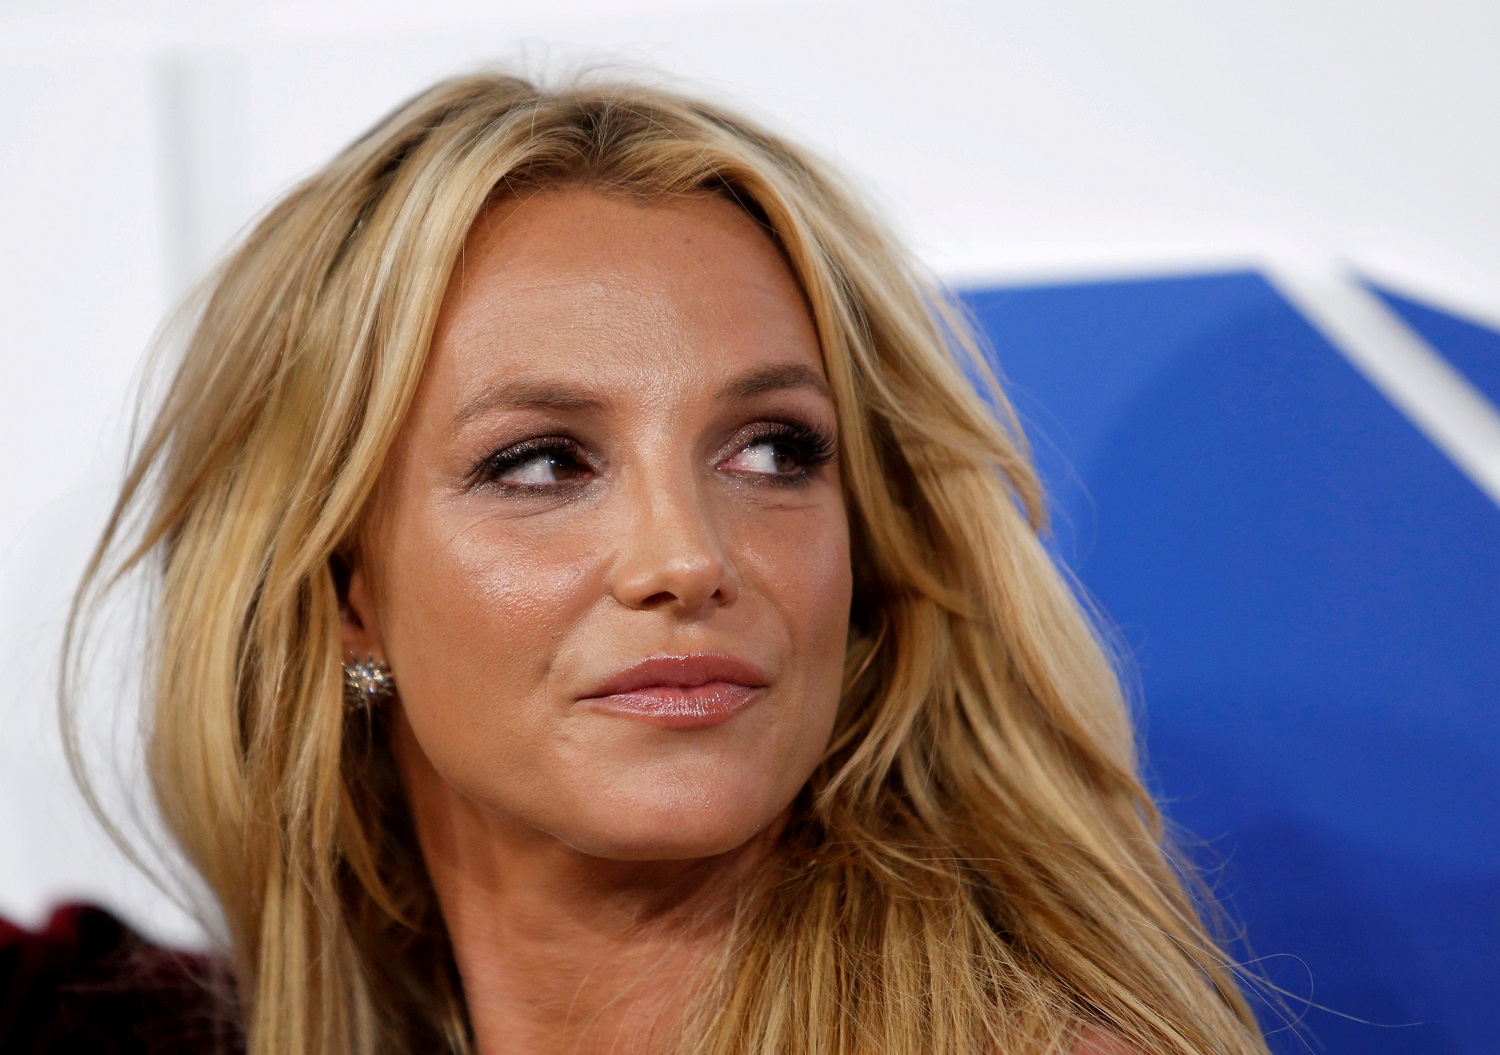 Una empleada doméstica denunció a Britney Spears por golpearla